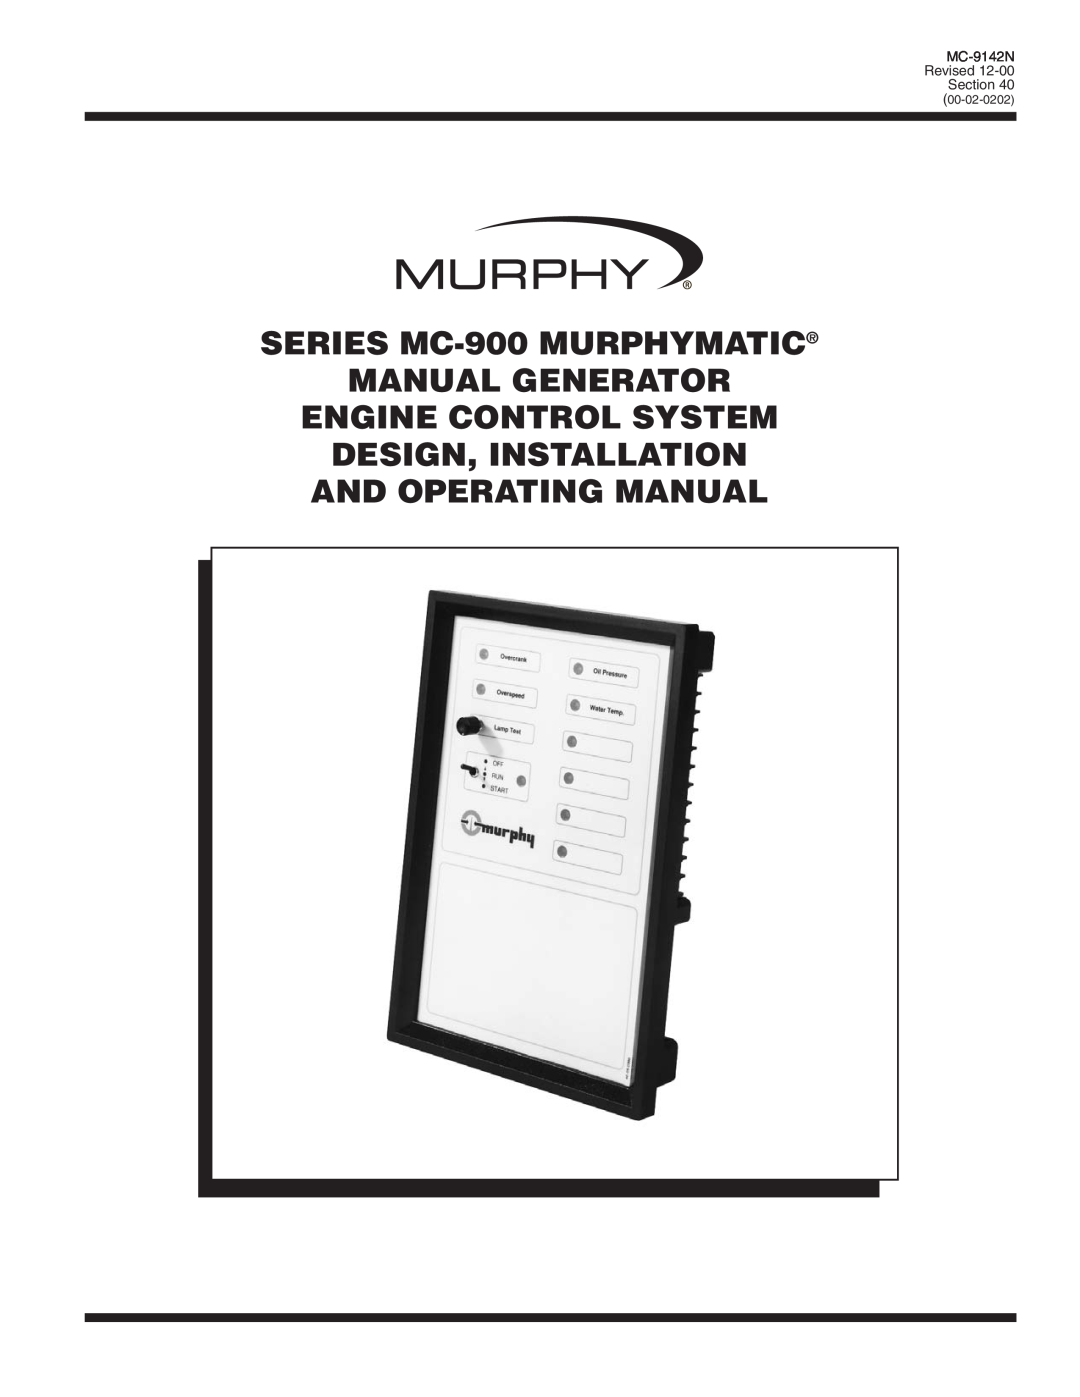 Murphy MC-900 Series manual SERIES MC-900 MURPHYMATIC MANUAL GENERATOR ENGINE CONTROL SYSTEM, MC-9142N Revised Section 